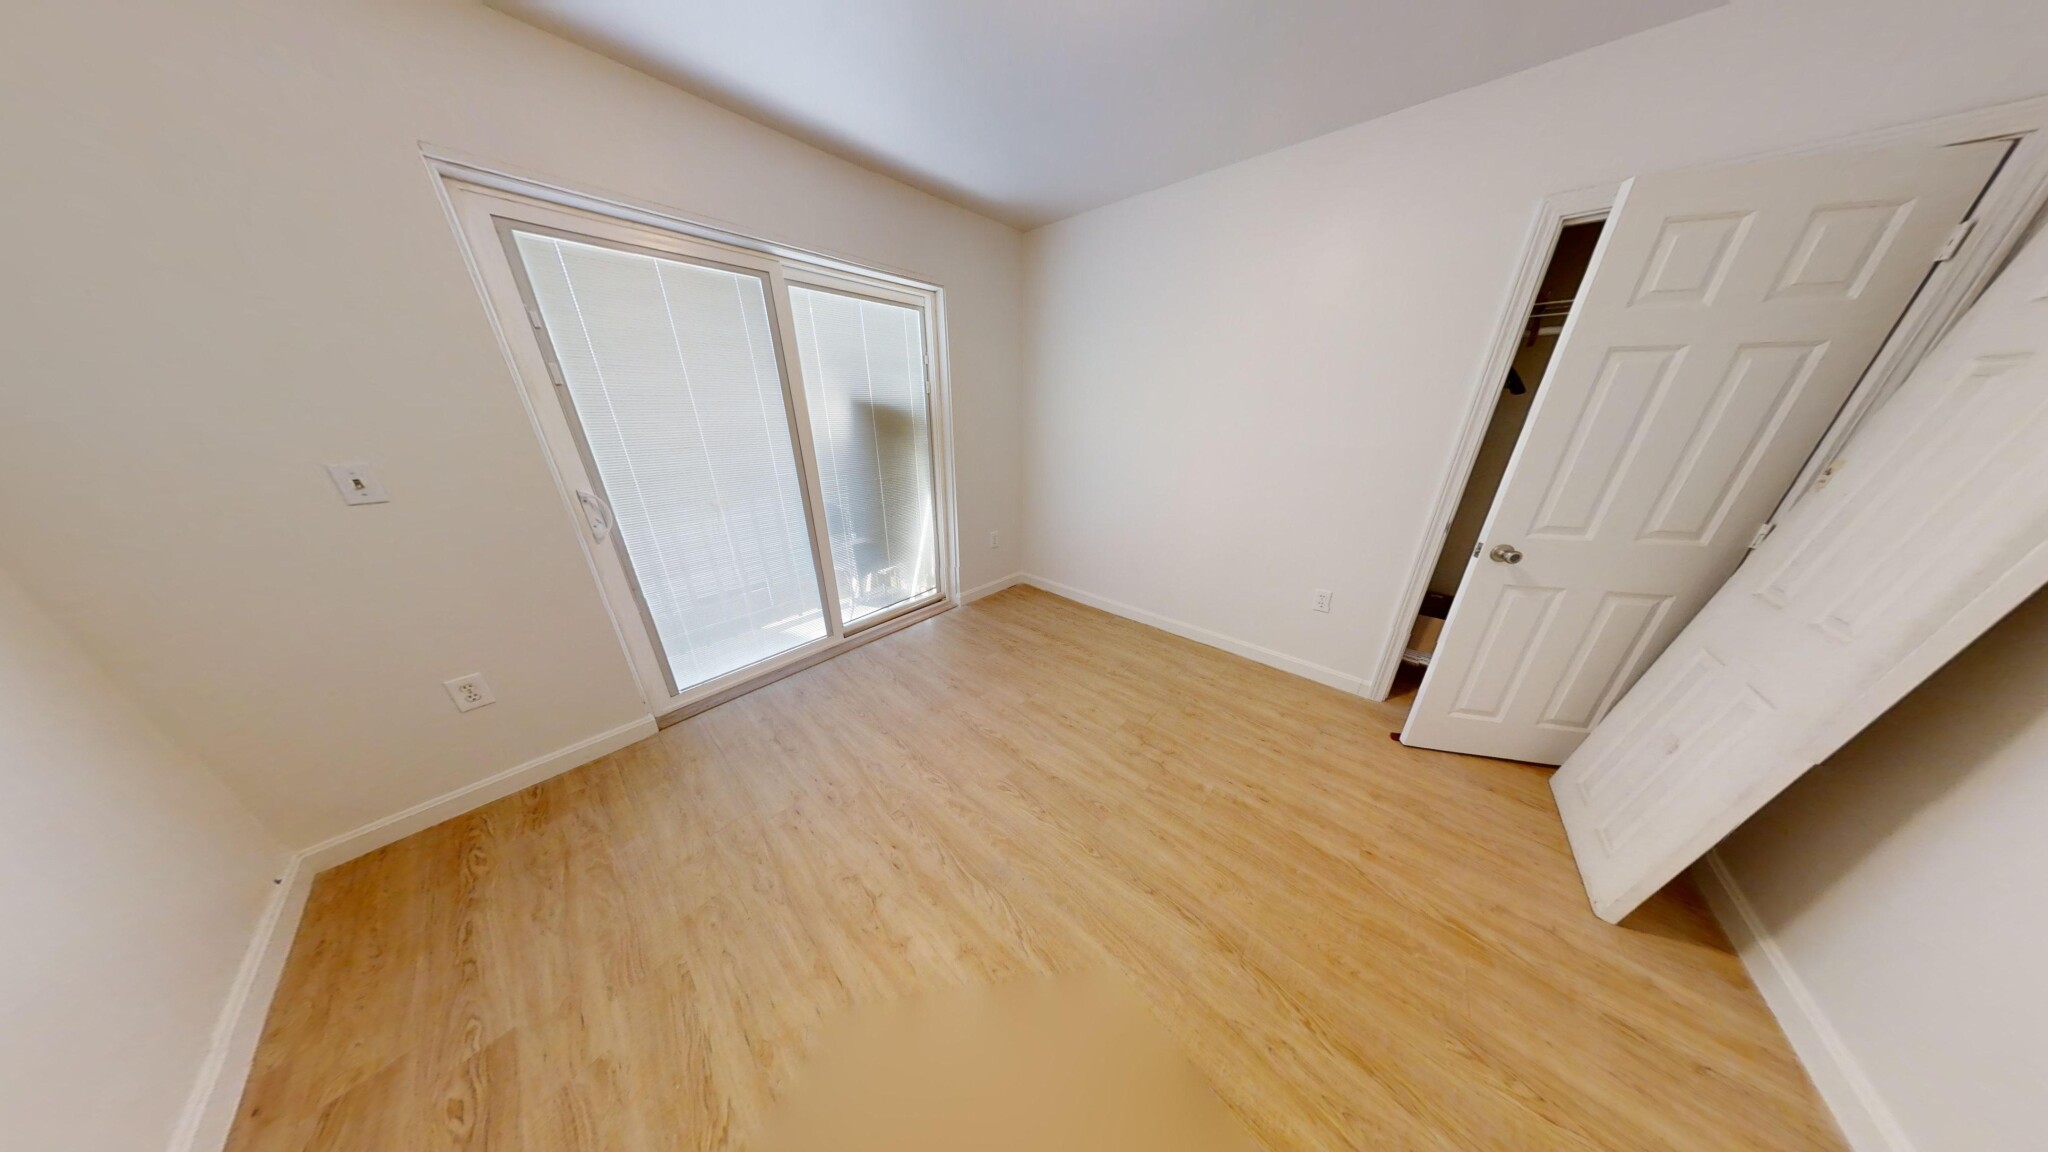 Photos of apartment on Dorchester St.,Boston MA 02127